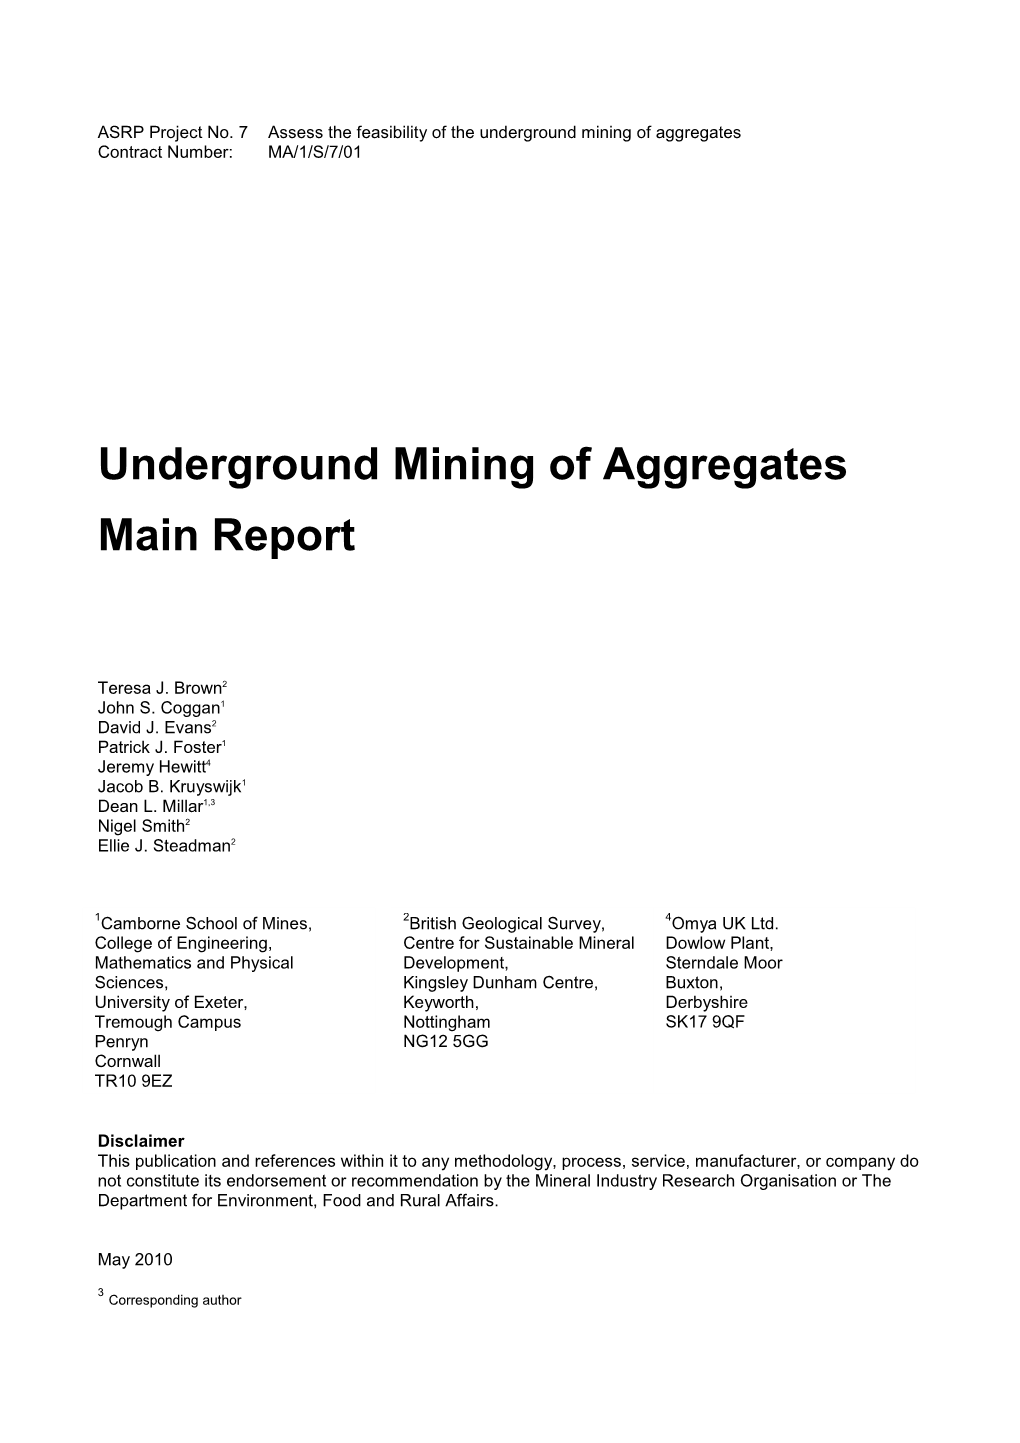 Underground Mining of Aggregates Main Report